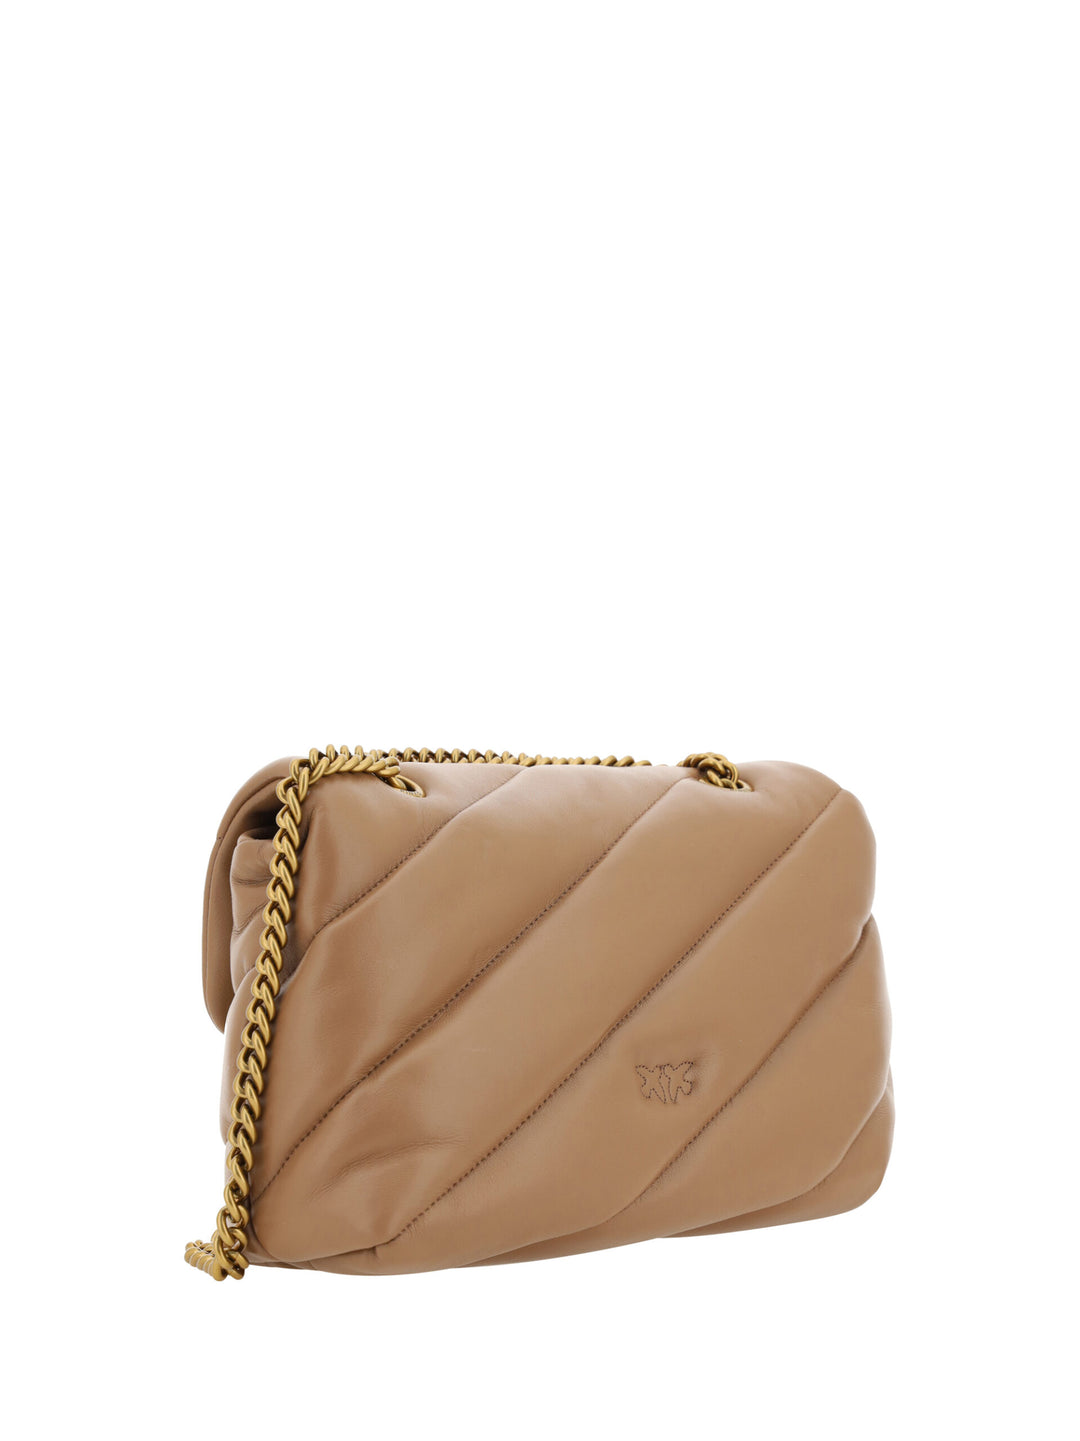 PINKO Brown Calf Leather Love Classic Shoulder Bag